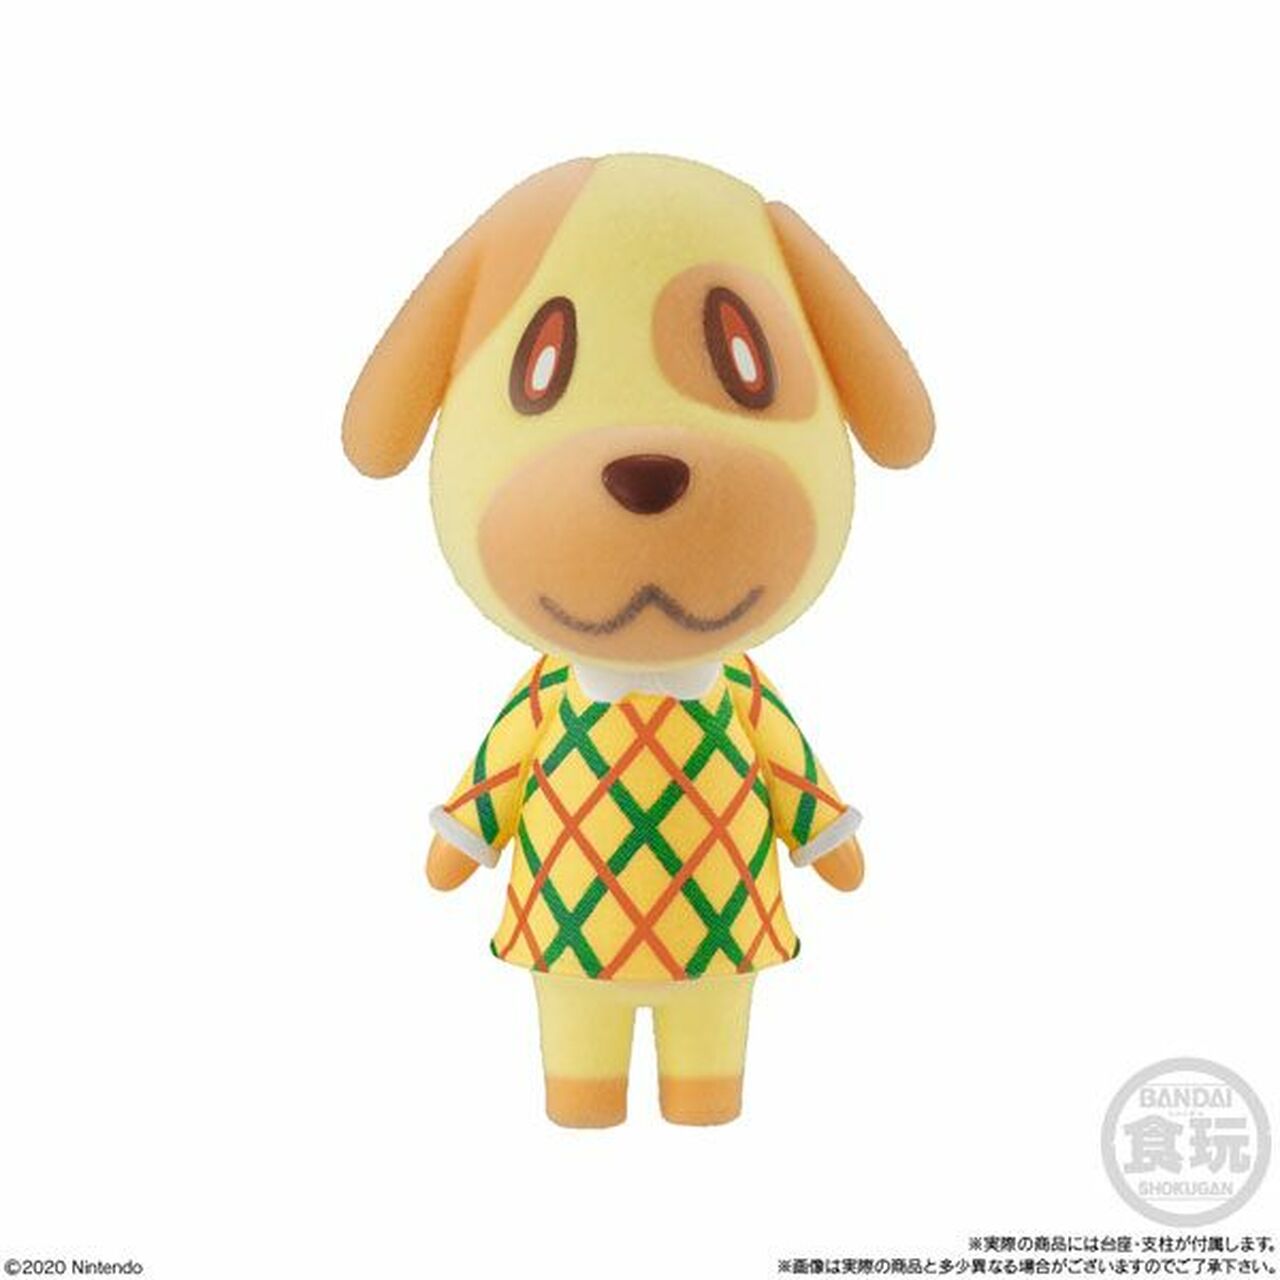 Bandai Shokugan Animal Crossing: New Horizons Friend Doll Vol. 3